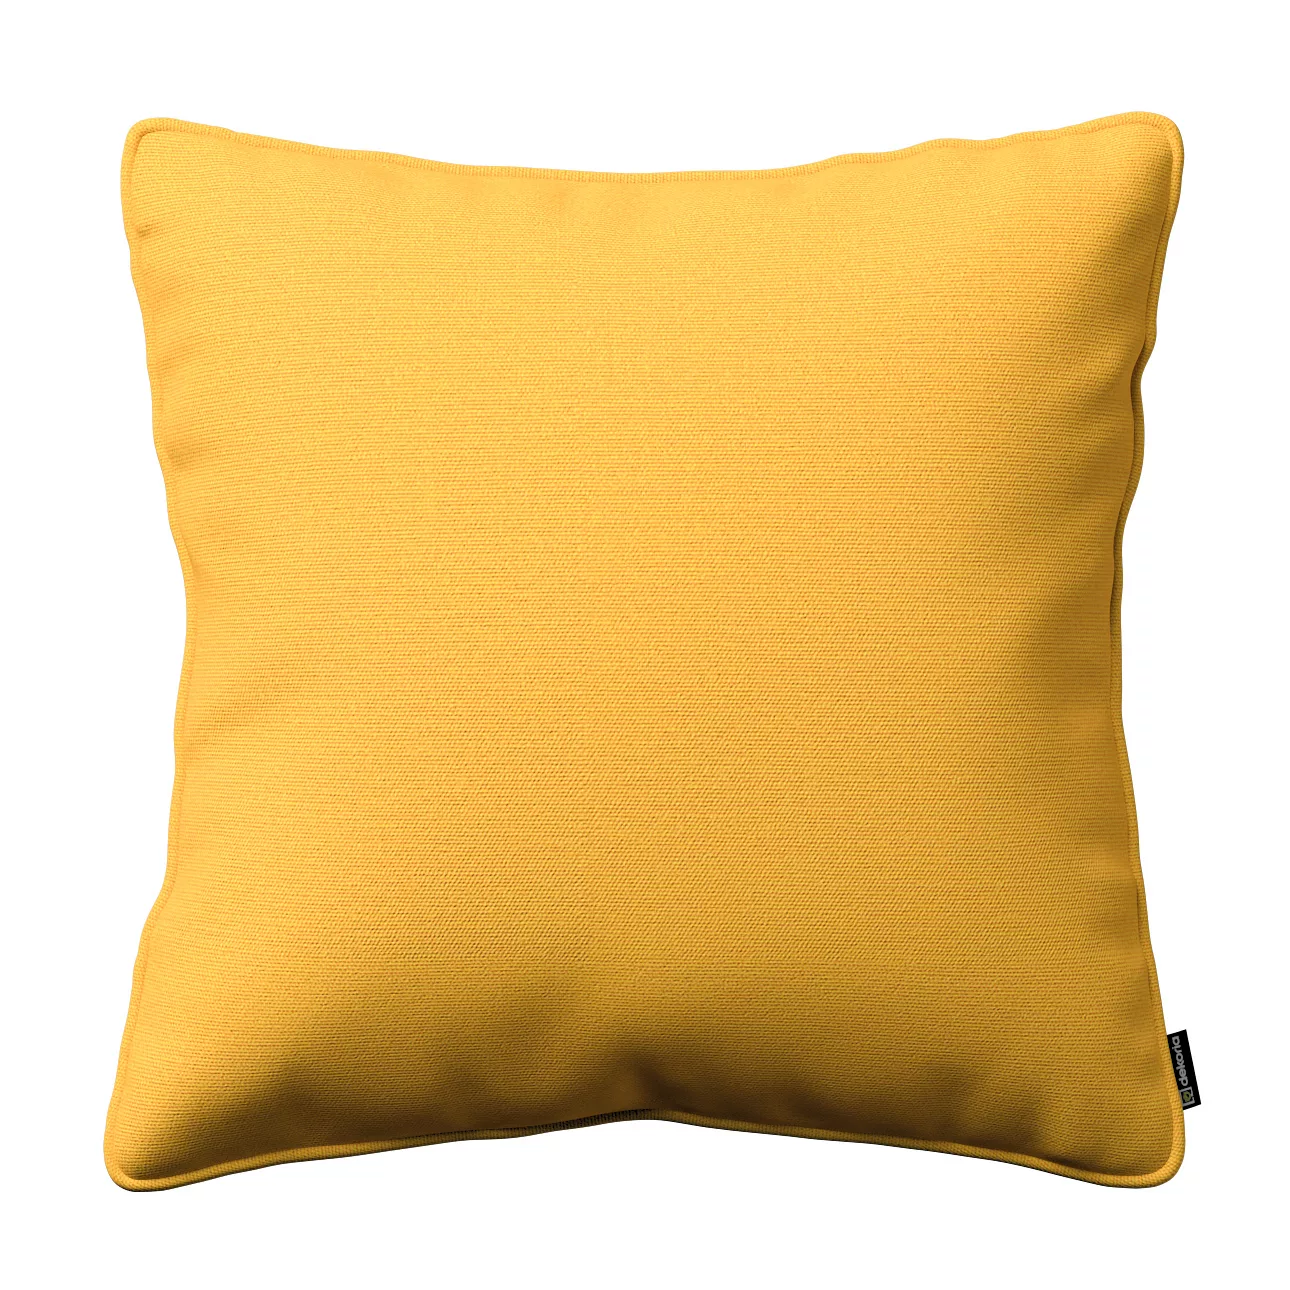 Kissenhülle Gabi mit Paspel, gelb, 45 x 45 cm, Loneta (133-40) günstig online kaufen